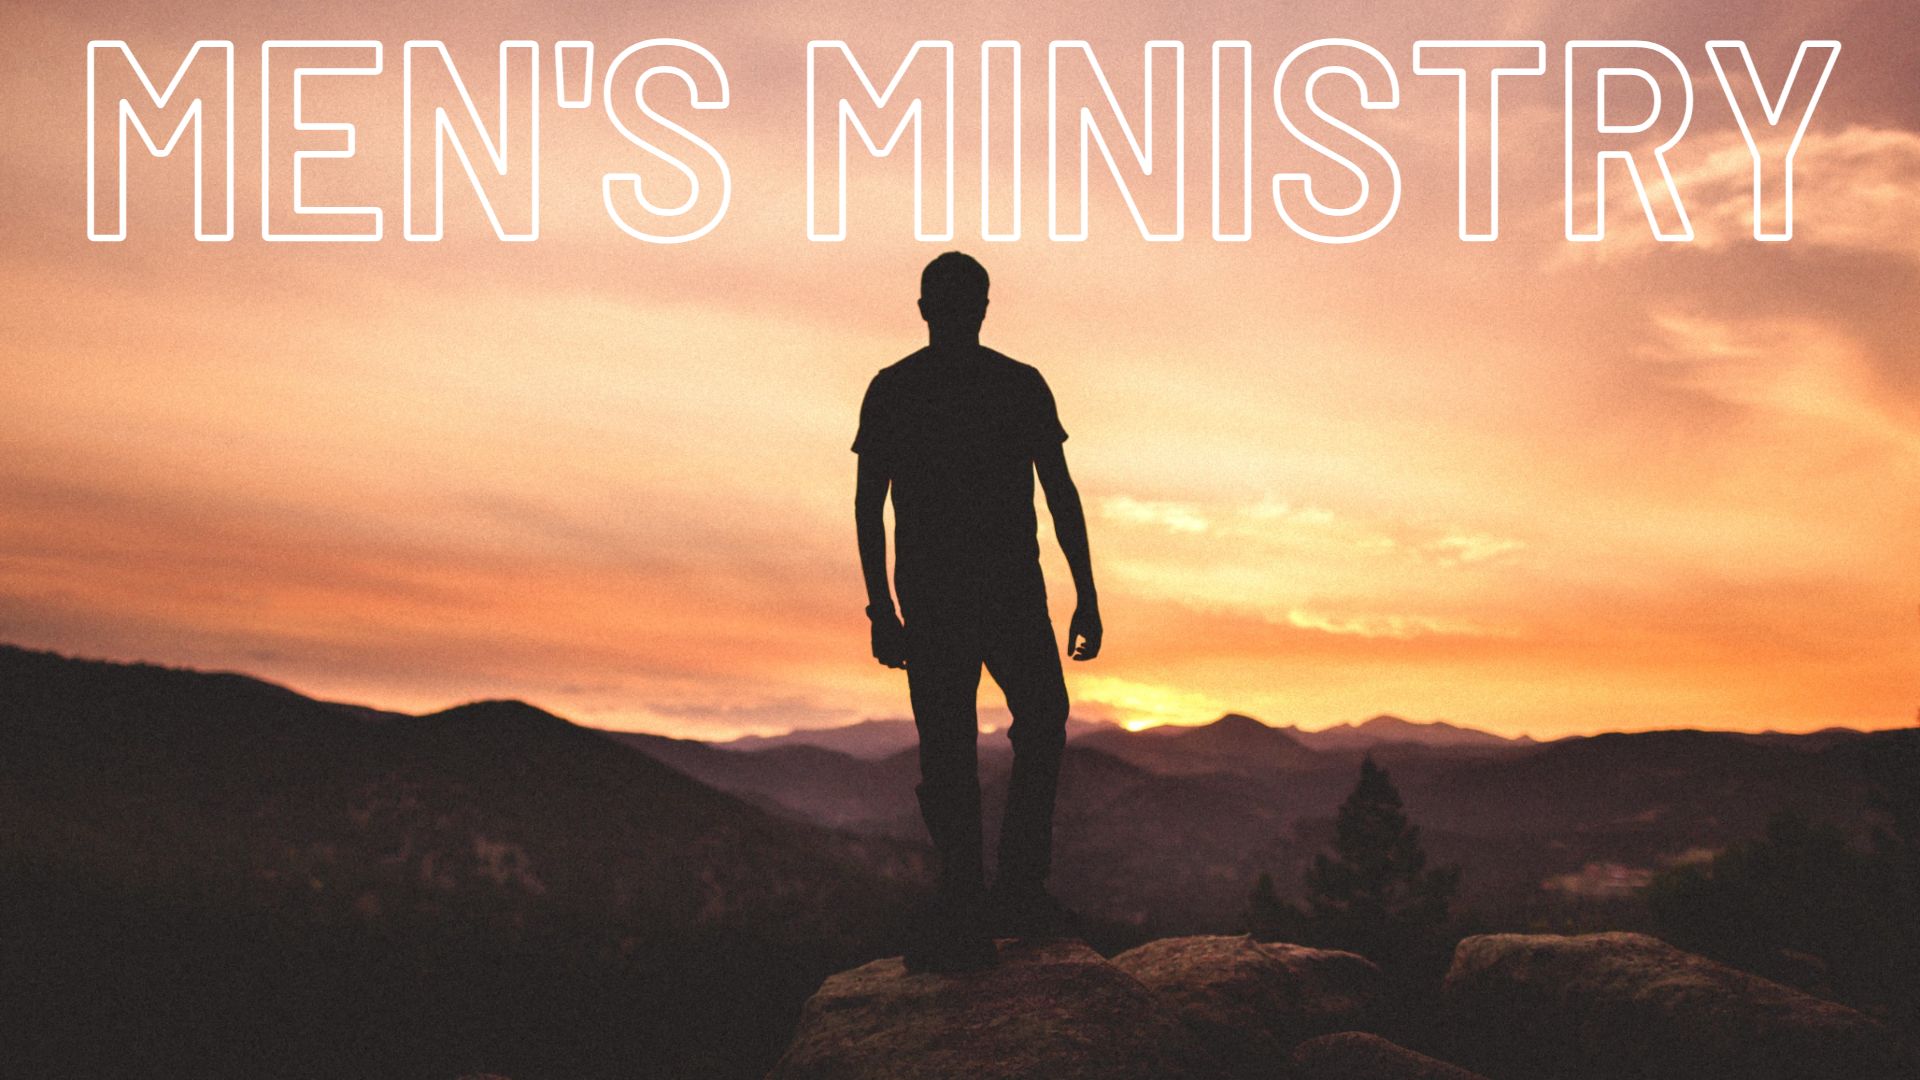 Men's ministry 1920x1080 image